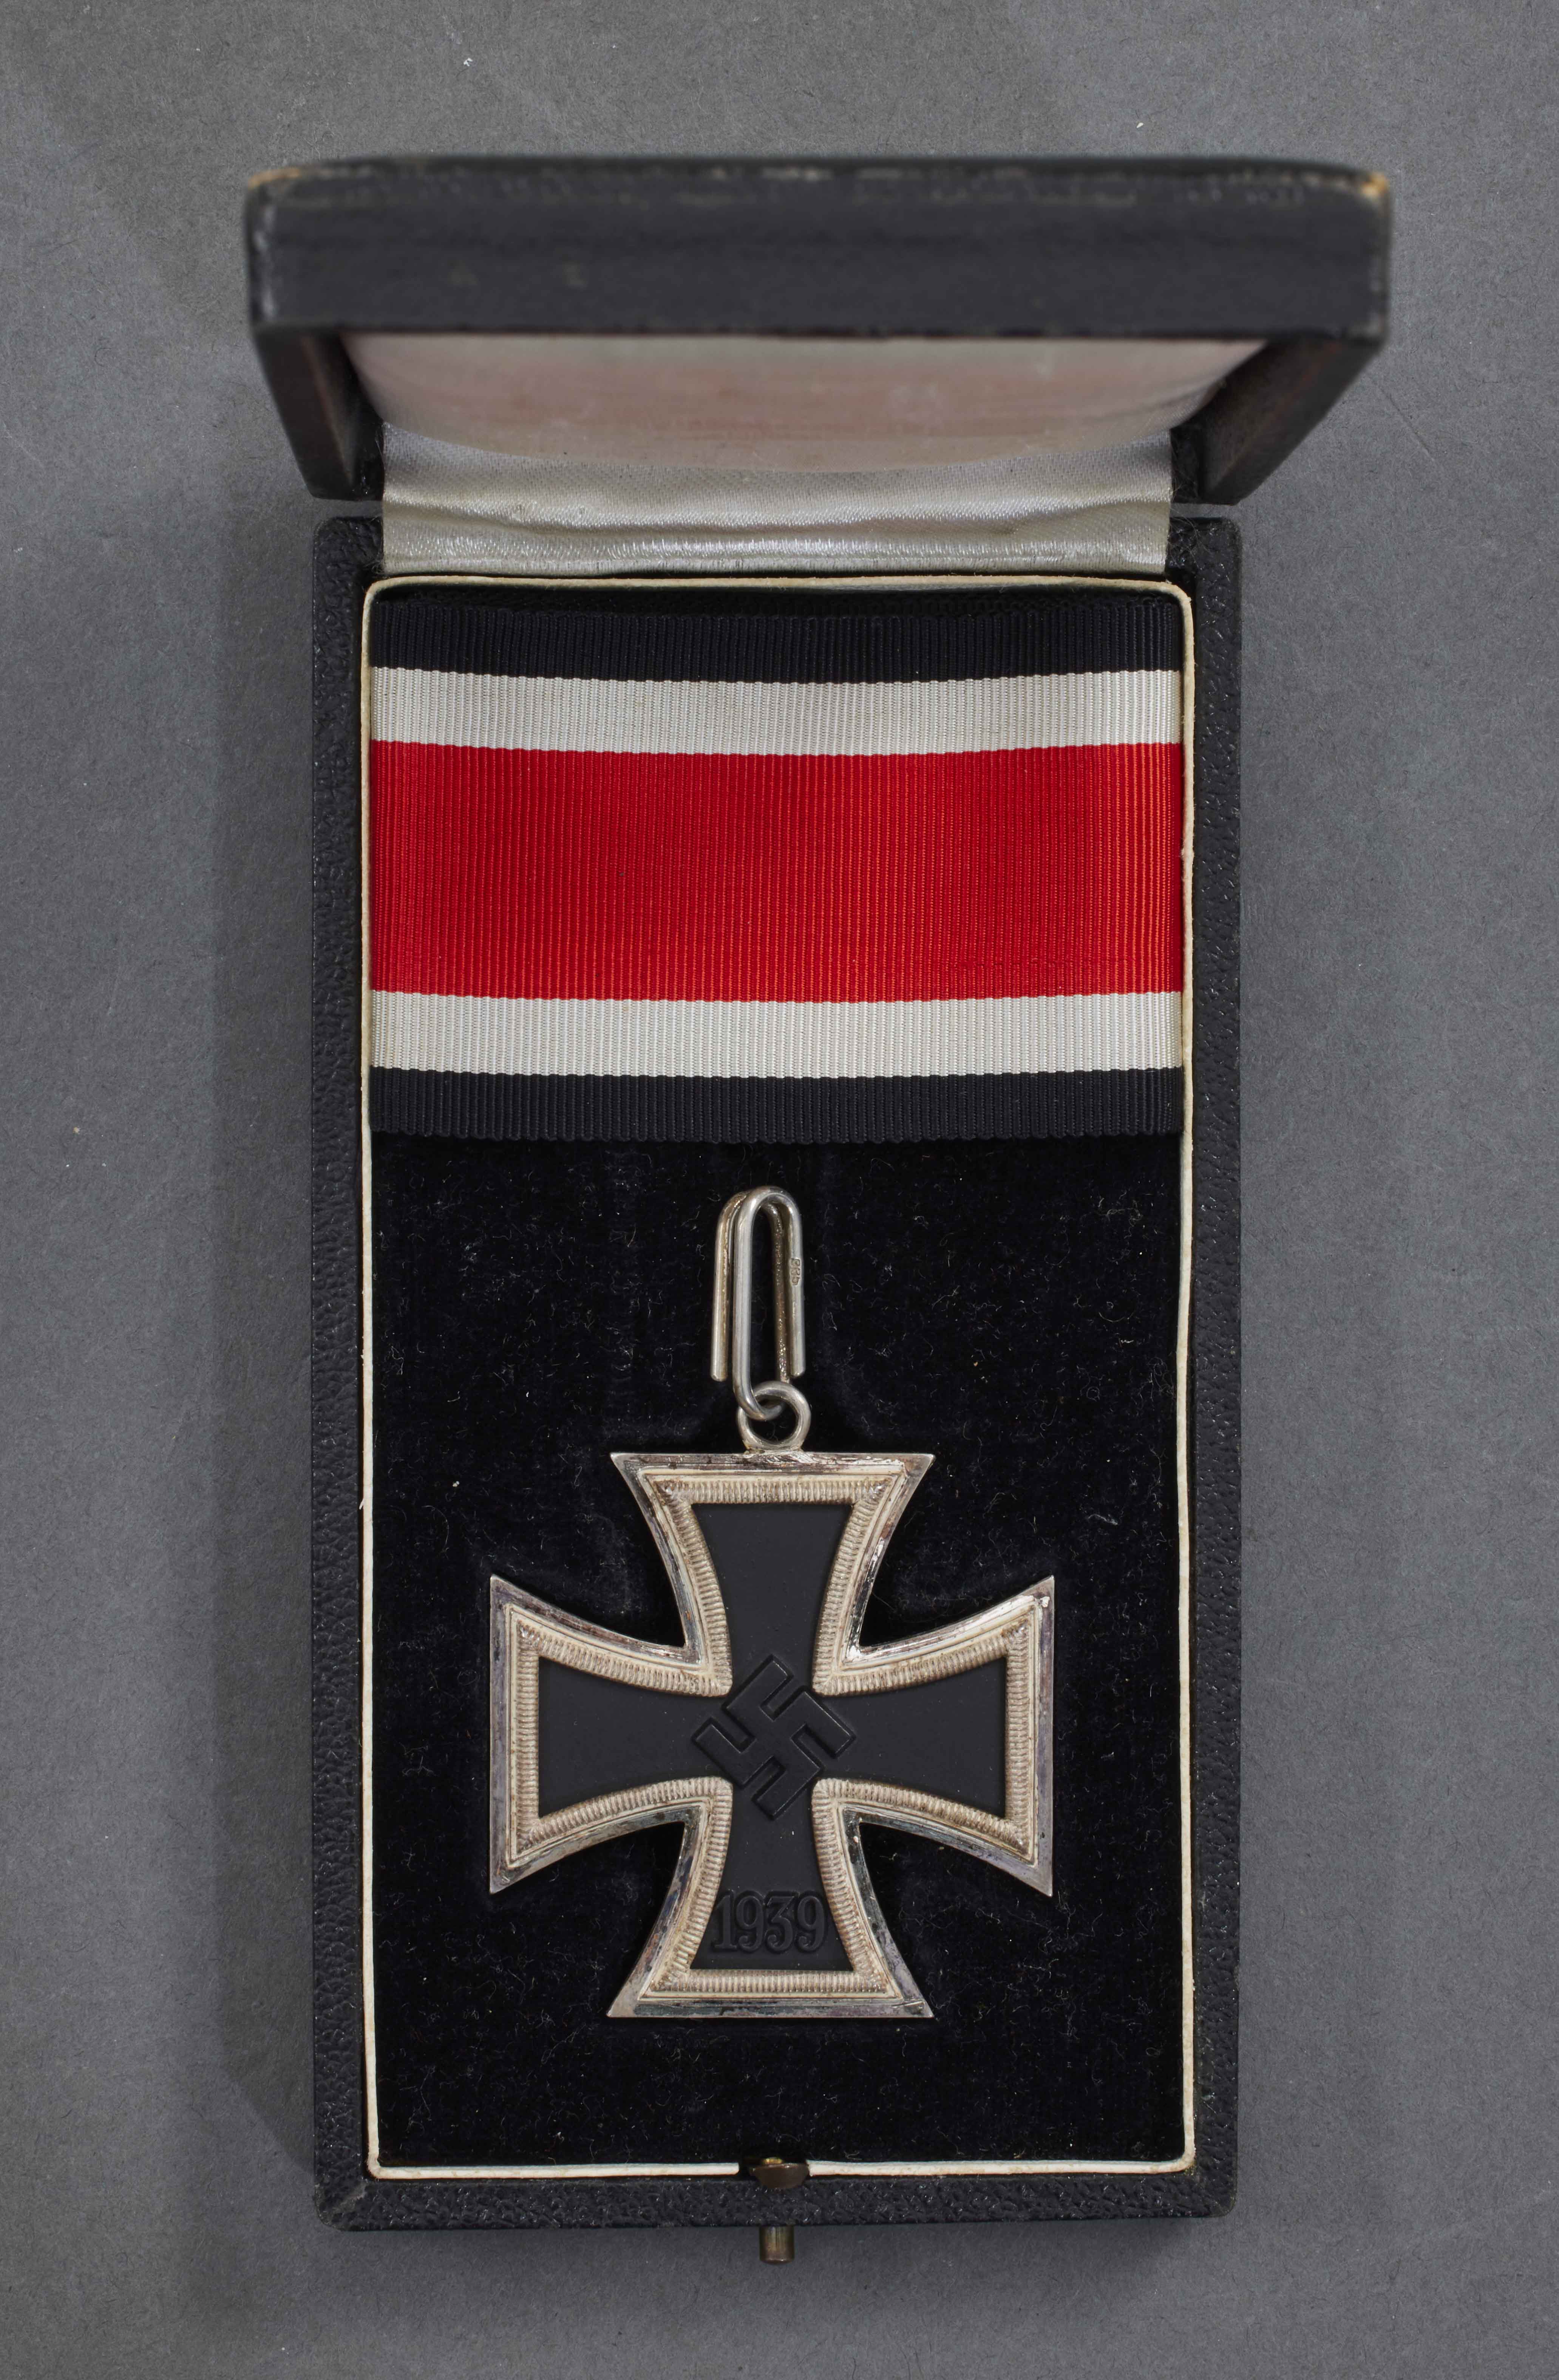 Cased Knights Cross Iron Cross by S&L